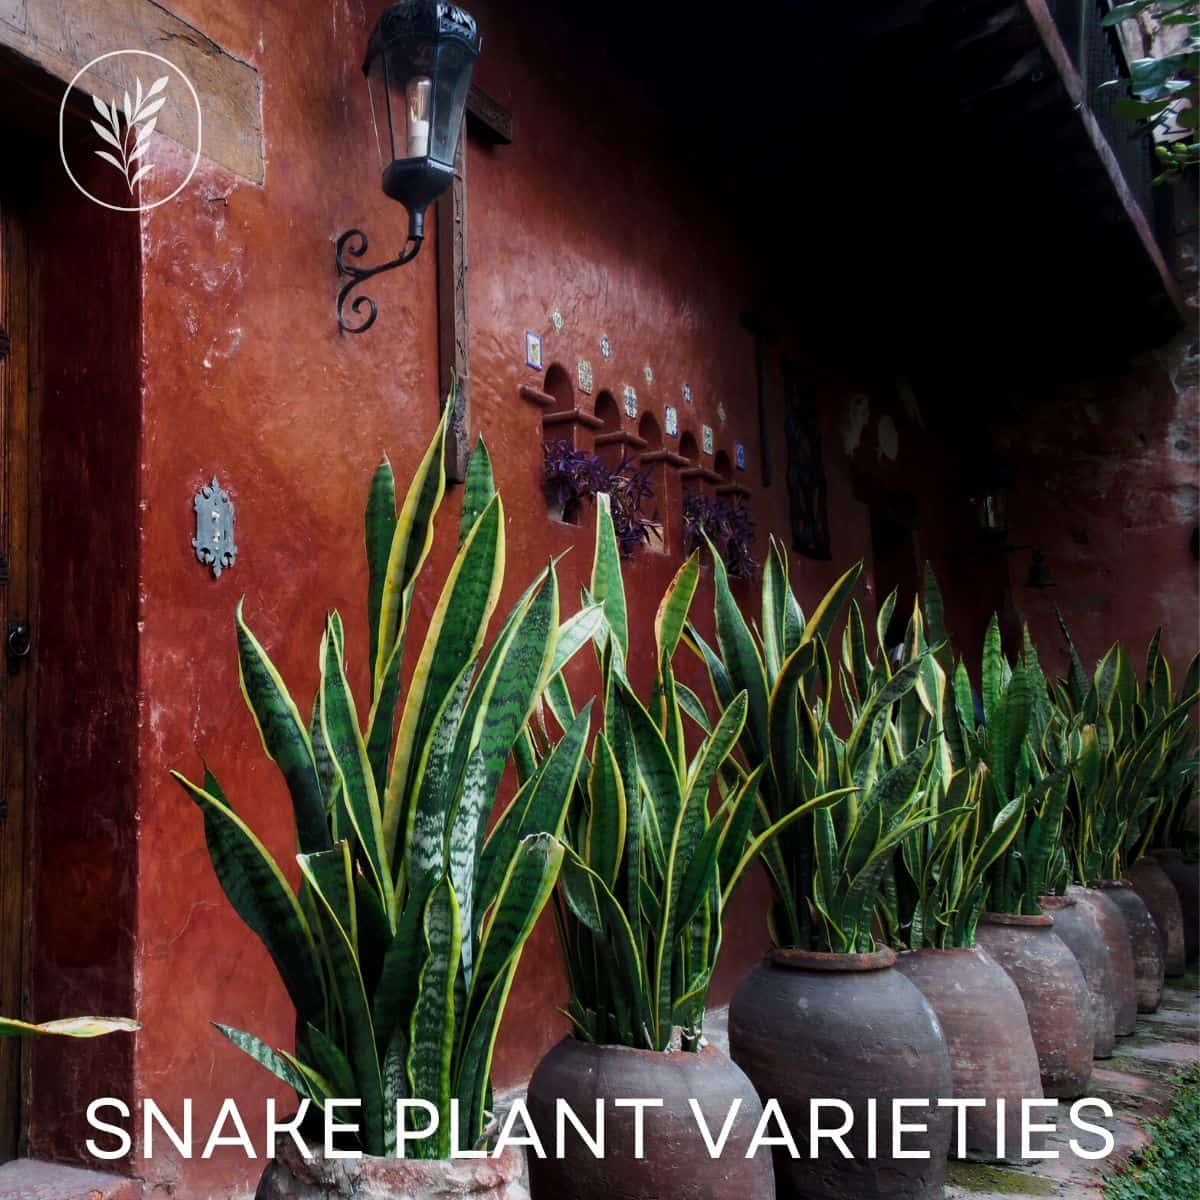 Snake plant varieties via @home4theharvest